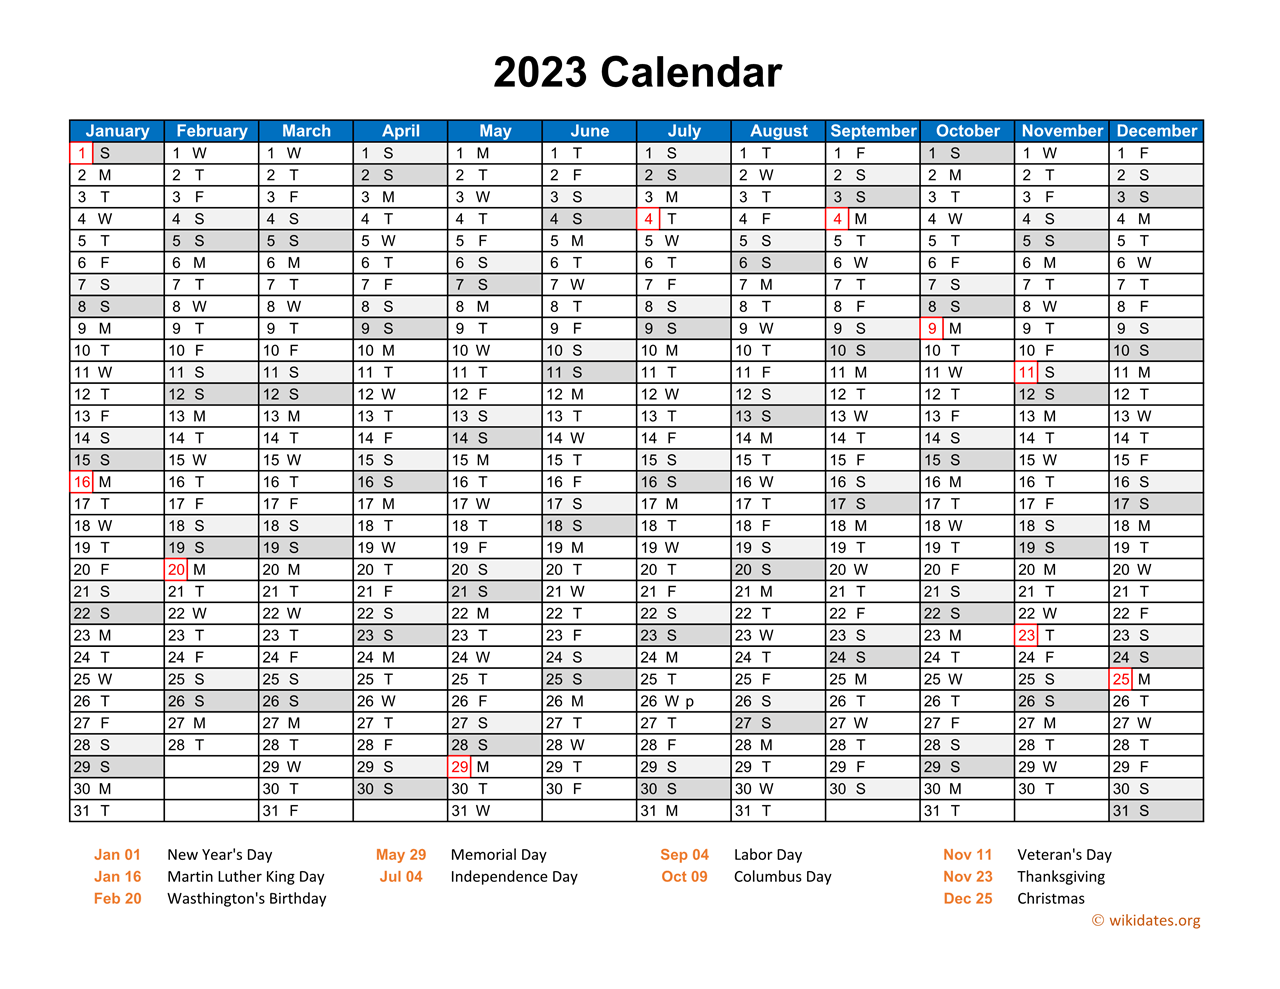 2023 calendar horizontal one page wikidates org